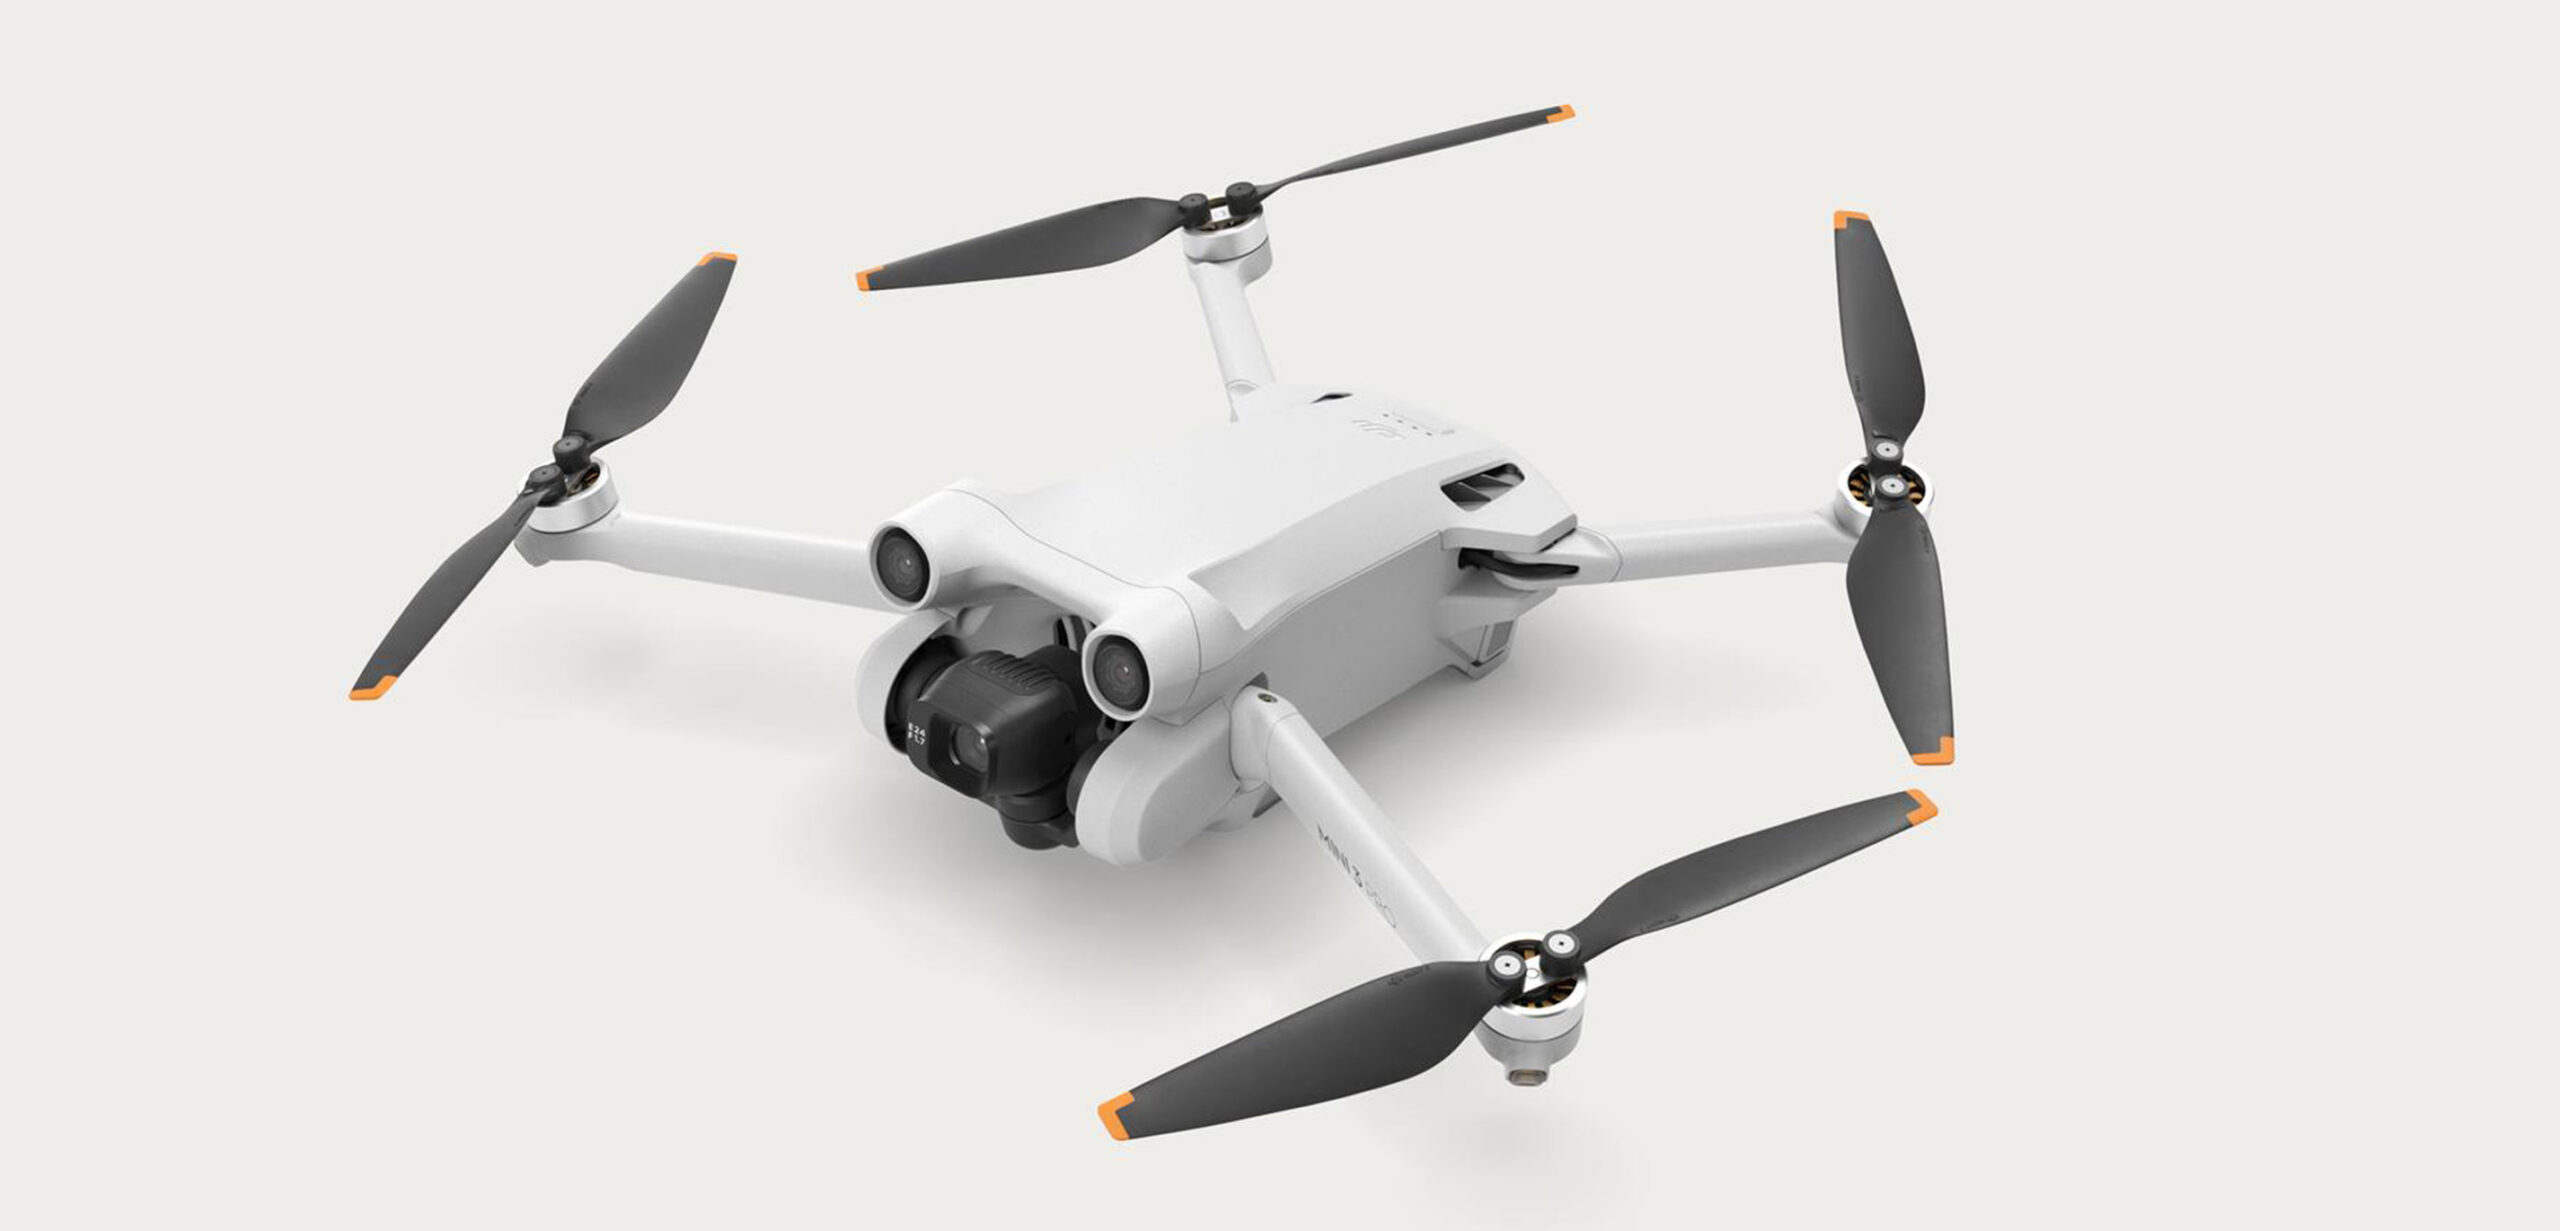 DJI Mini 3 Pro review - a capable travel drone